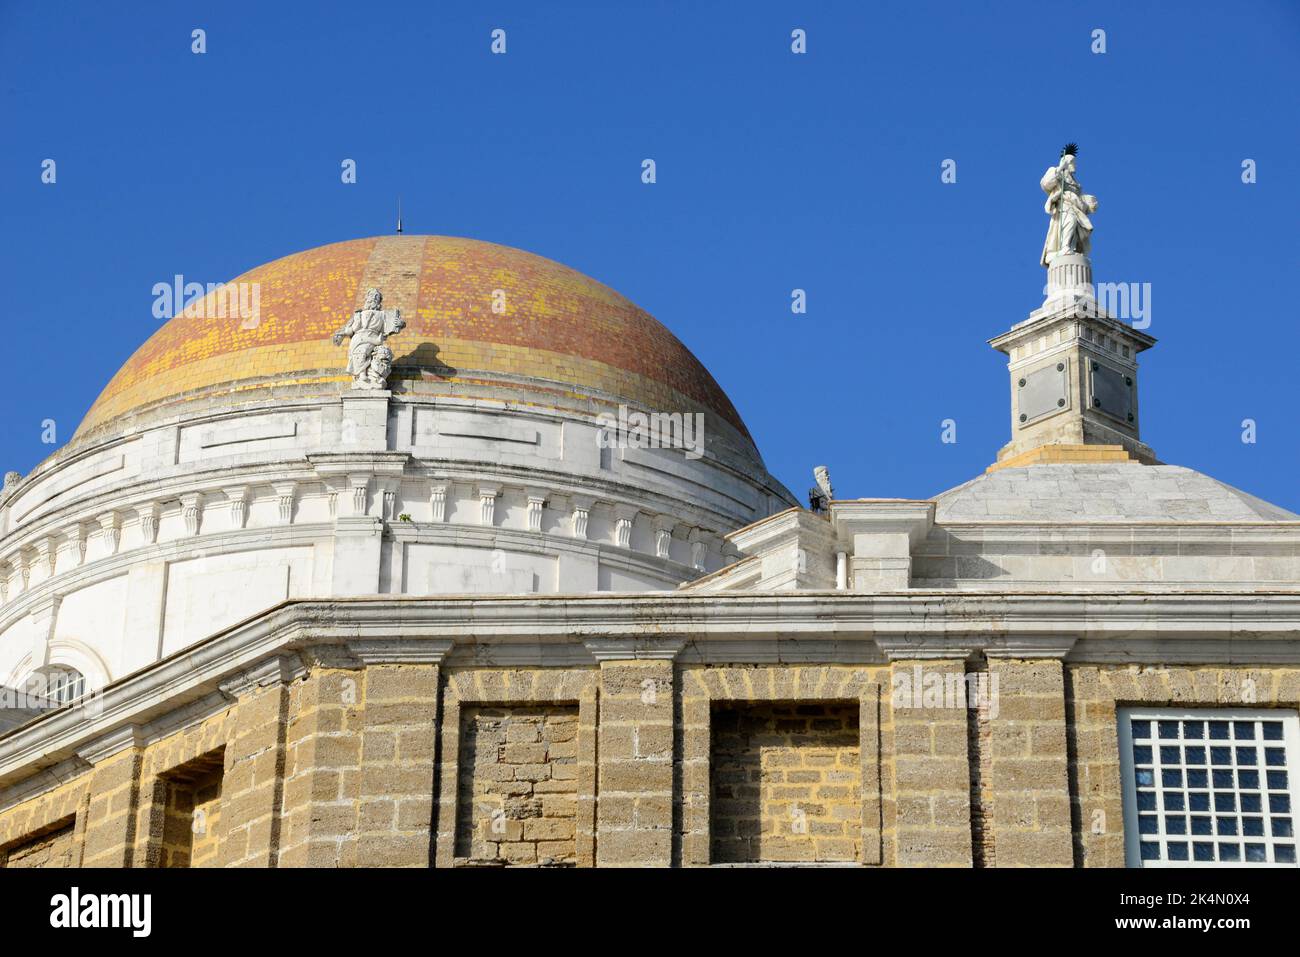 Ccadi, Santa Cruz Kathedrale (Barock und neoklassizistisch 18-19. Jahrhundert). Andalusien, Spanien. Stockfoto